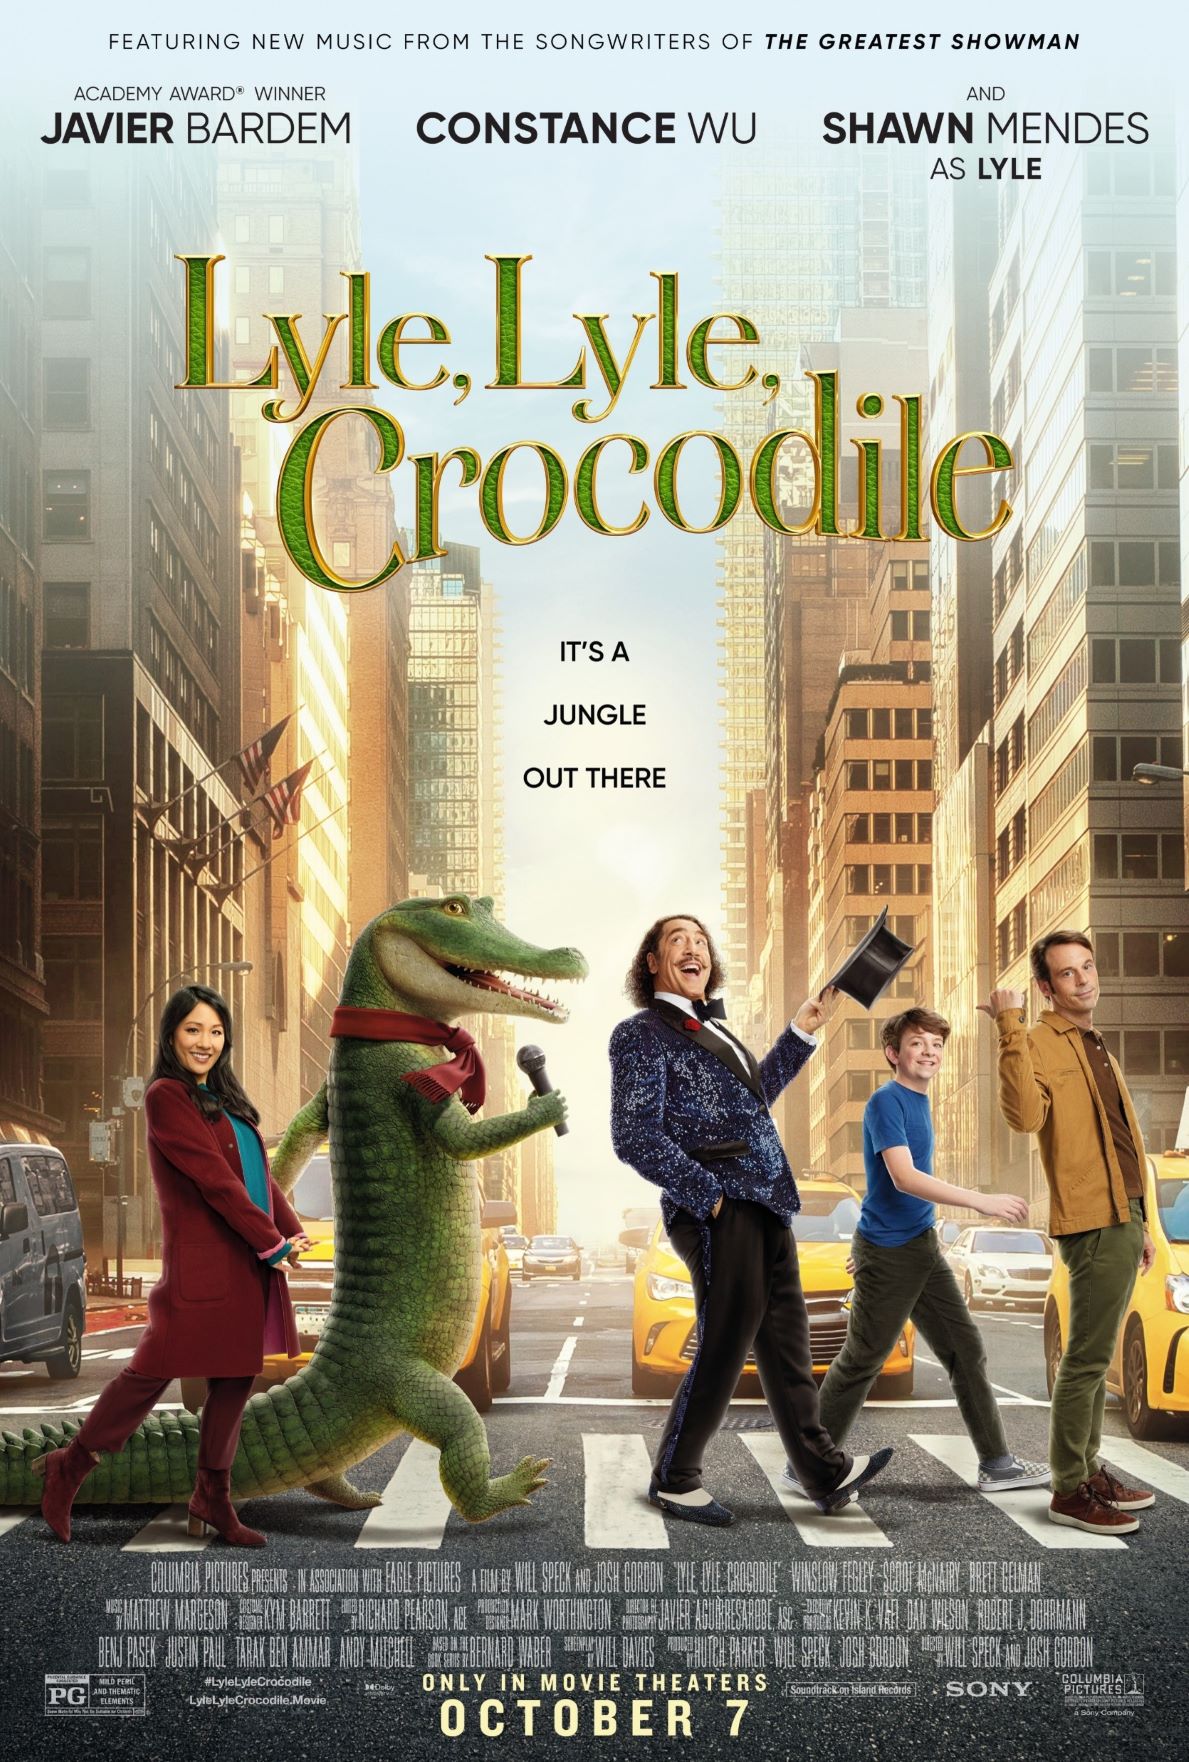 Lyle, Lyle, Crocodile Movie Cover